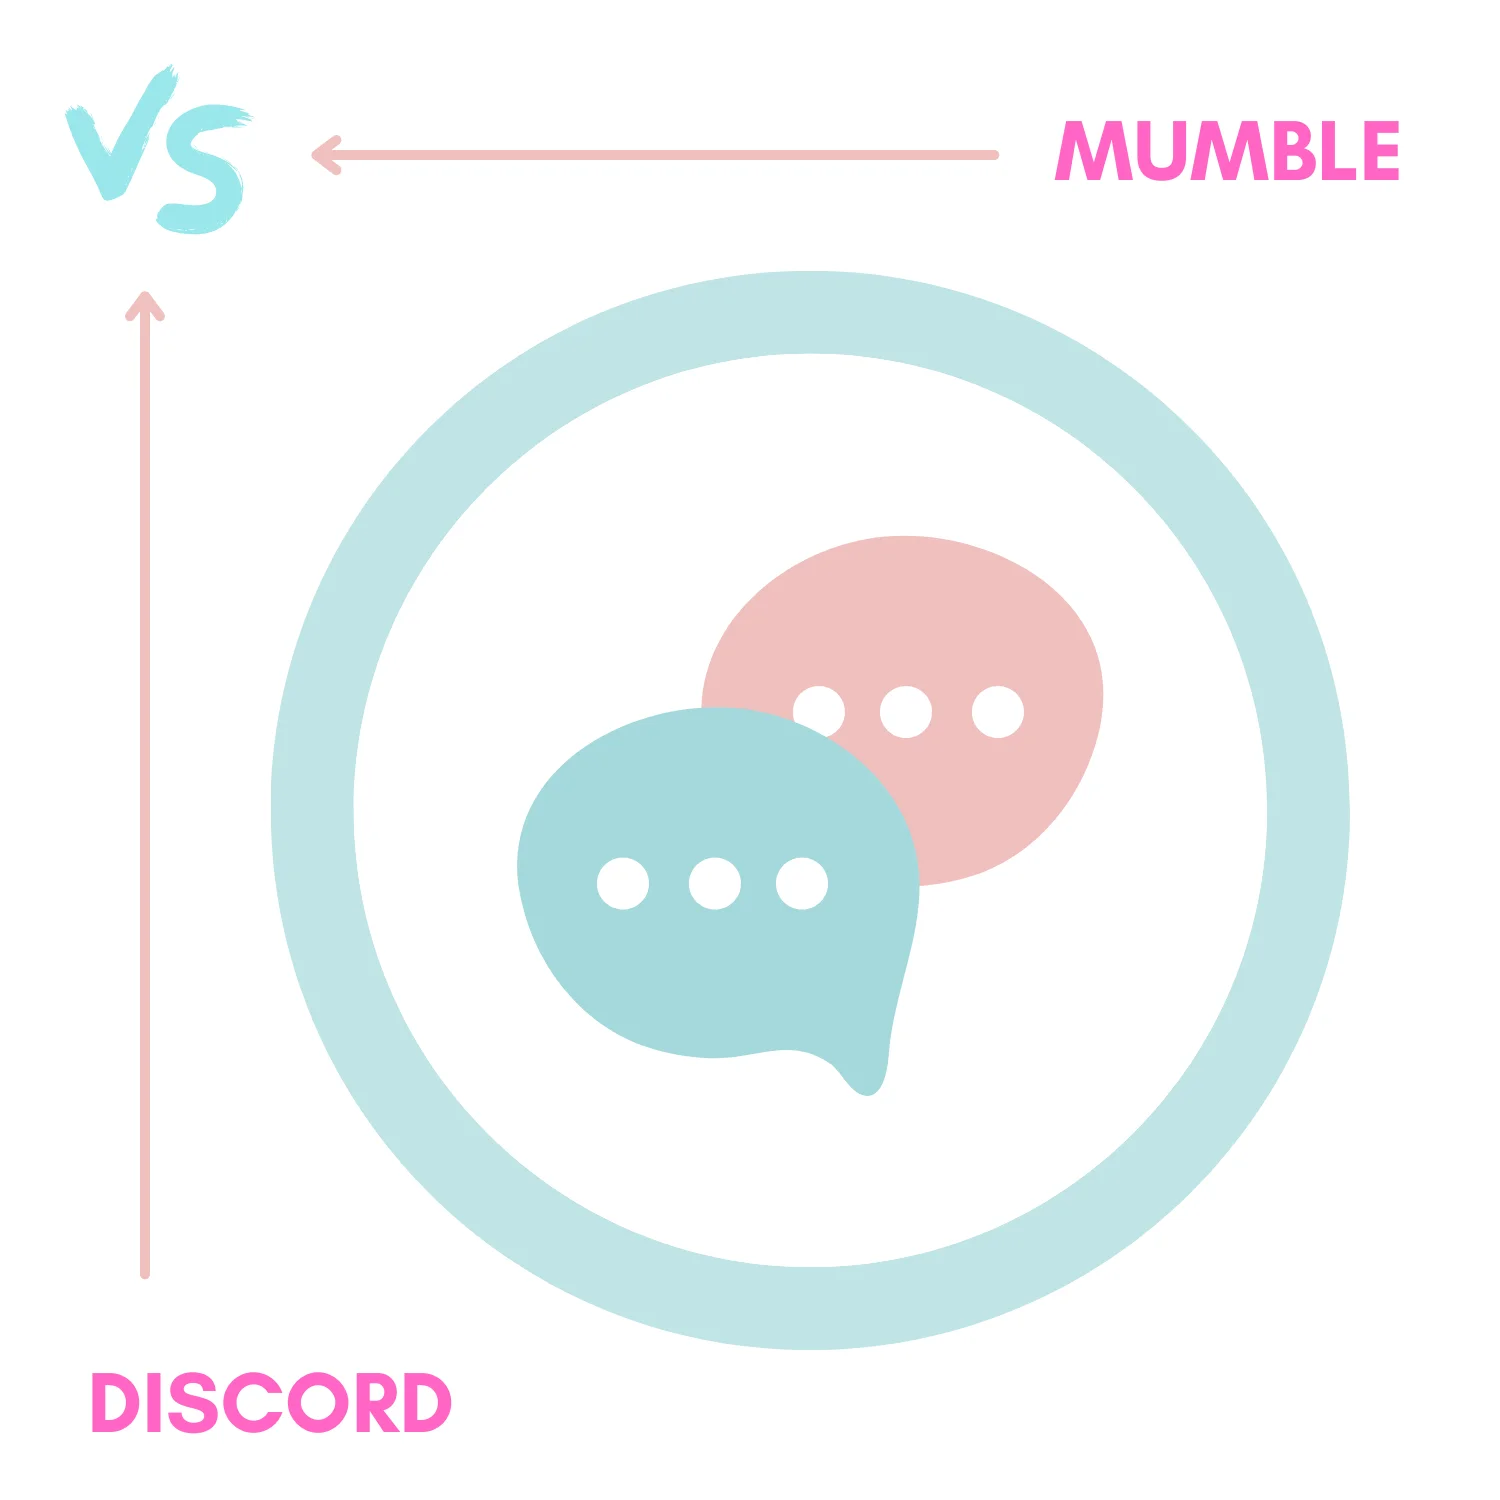 Mumble vs. Discord